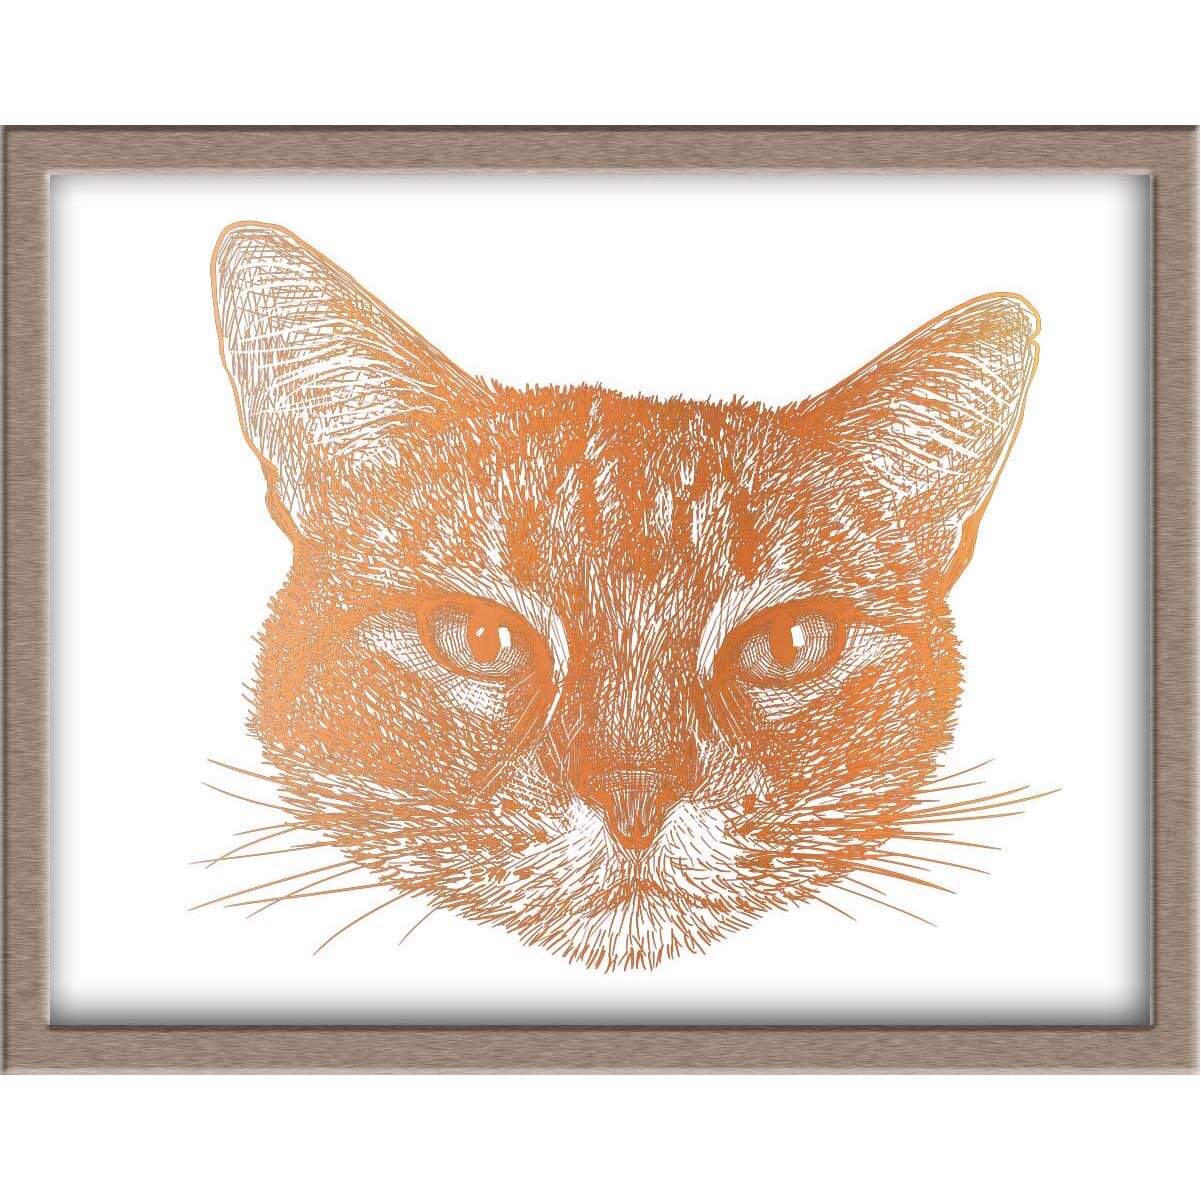 Adorable Cat Foiled Print (Lucy) Posters, Prints, & Visual Artwork JoyousJoyfulJoyness 